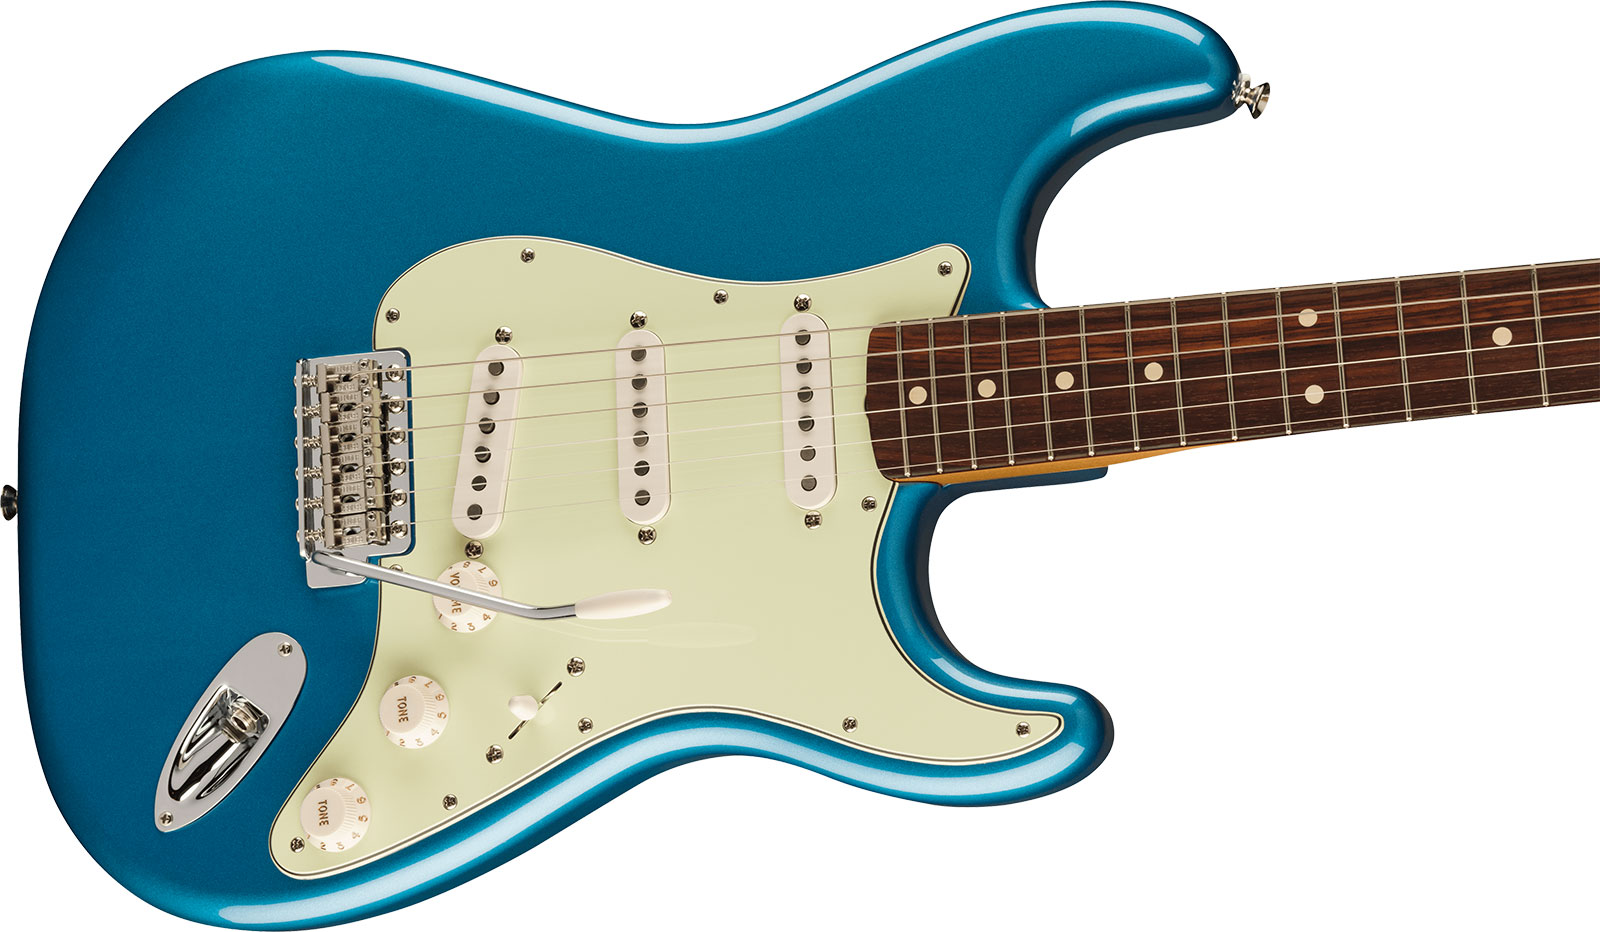 Fender Strat 60s Vintera 2 Mex 3s Trem Rw - Lake Placid Blue - Str shape electric guitar - Variation 2